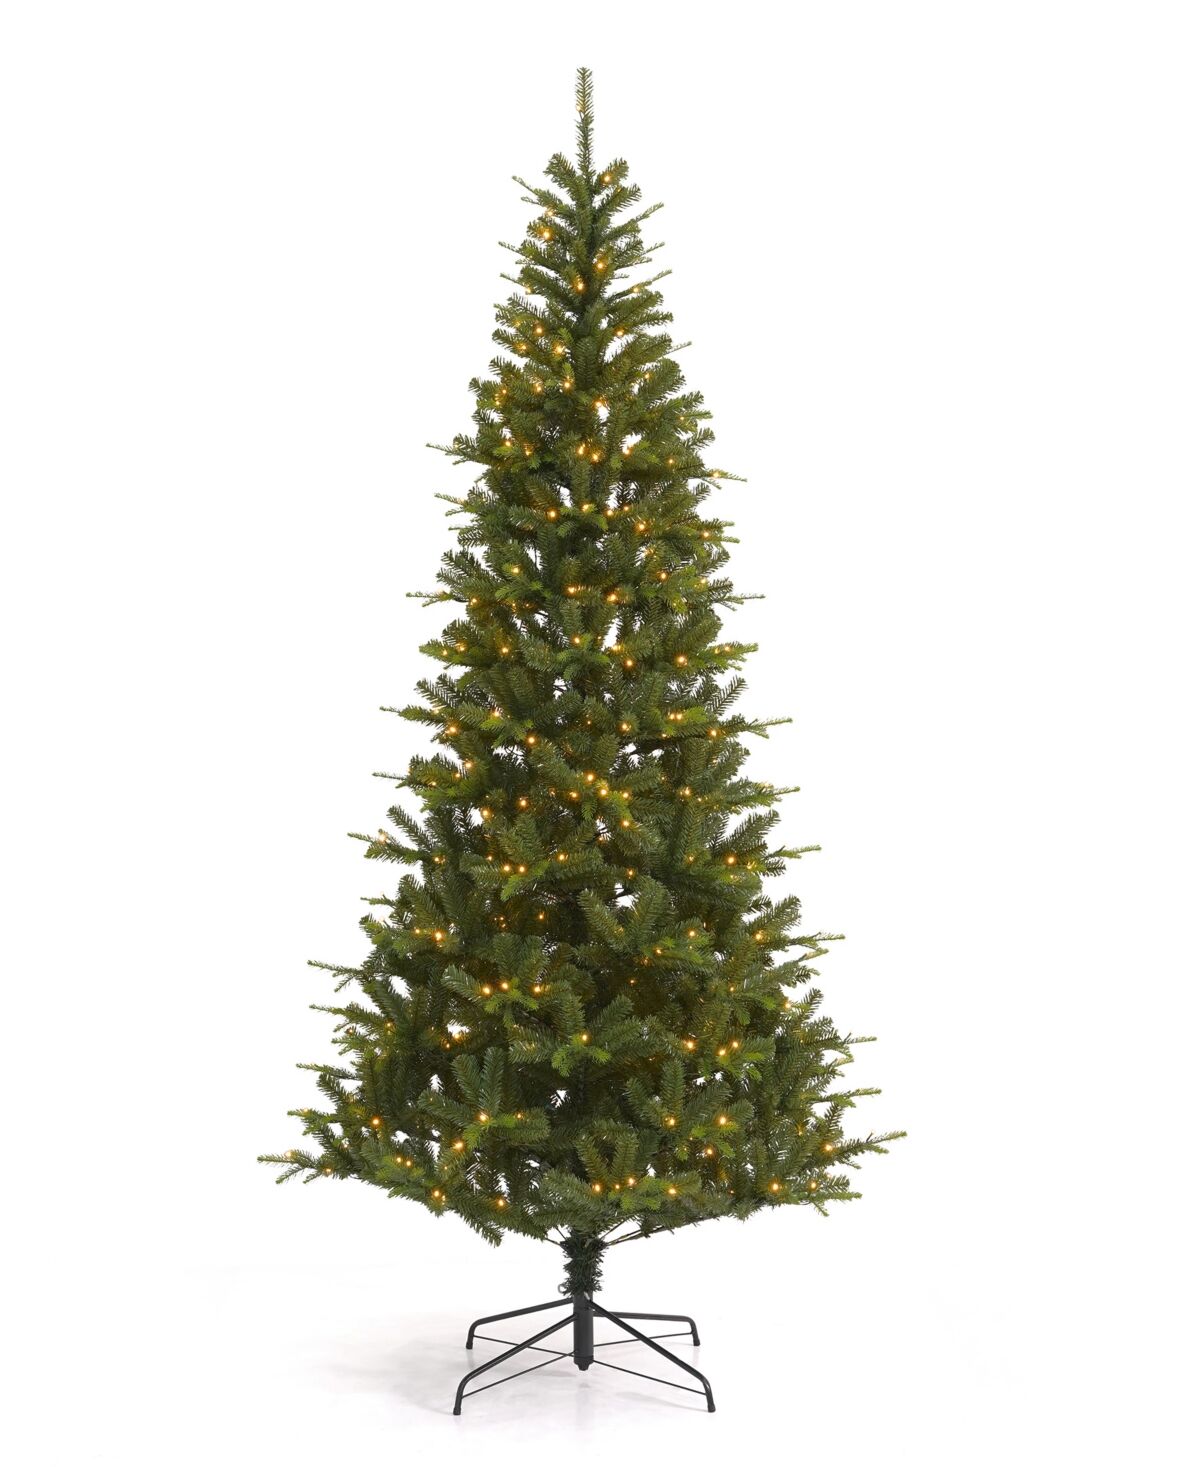 Seasonal Valley Pine 9' Pre-Lit Pe, Pvc Tree with Metal Stand, 1467 Tips, 550 Led Lights - Green